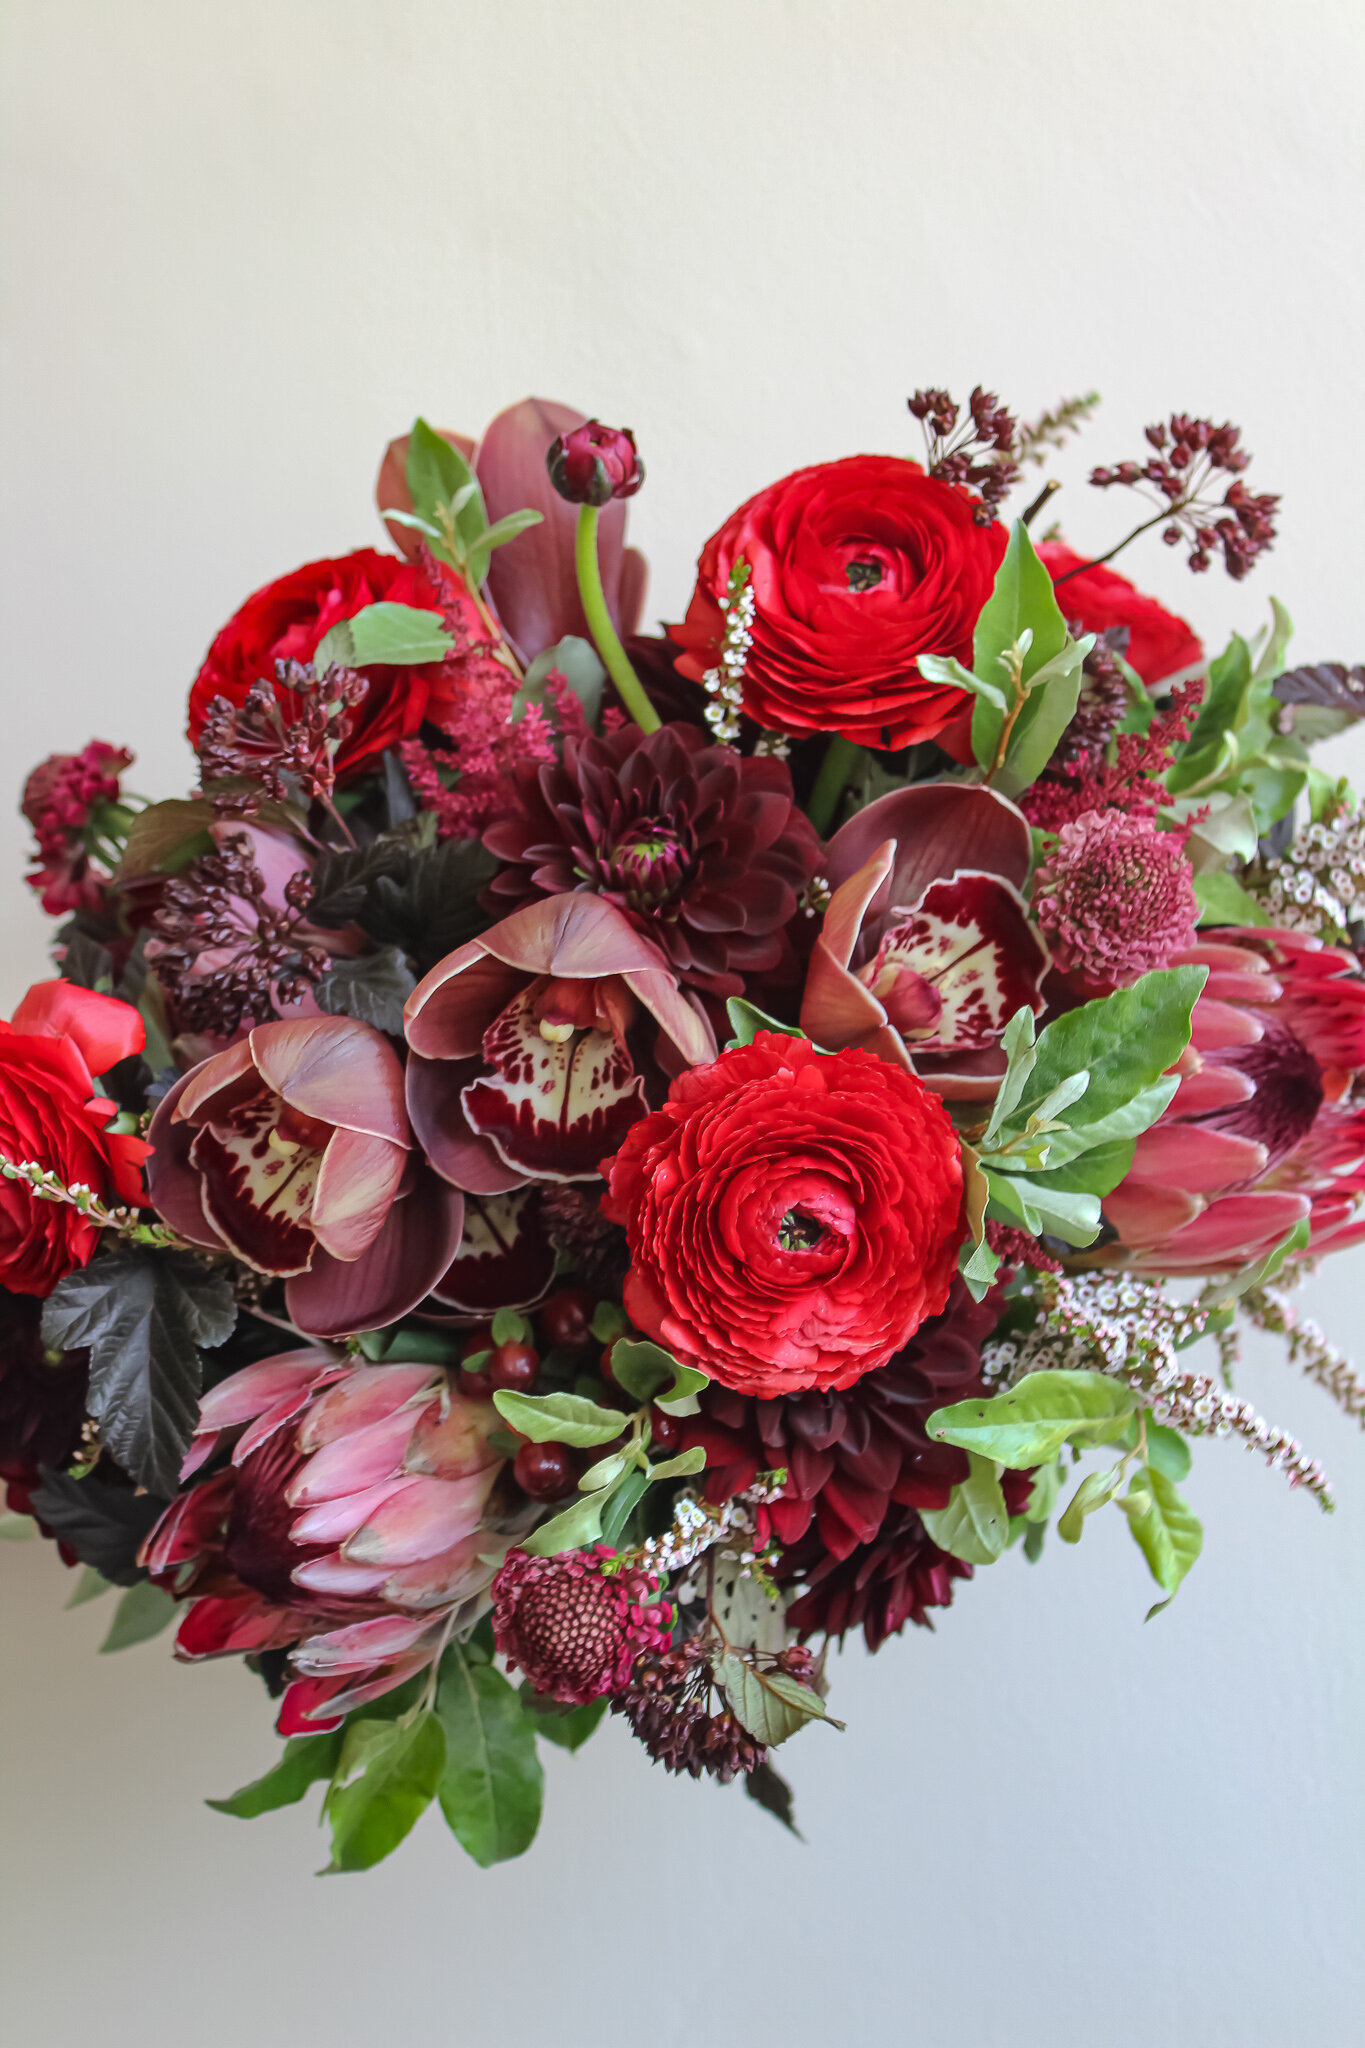 Image by Sarah's Floral Design